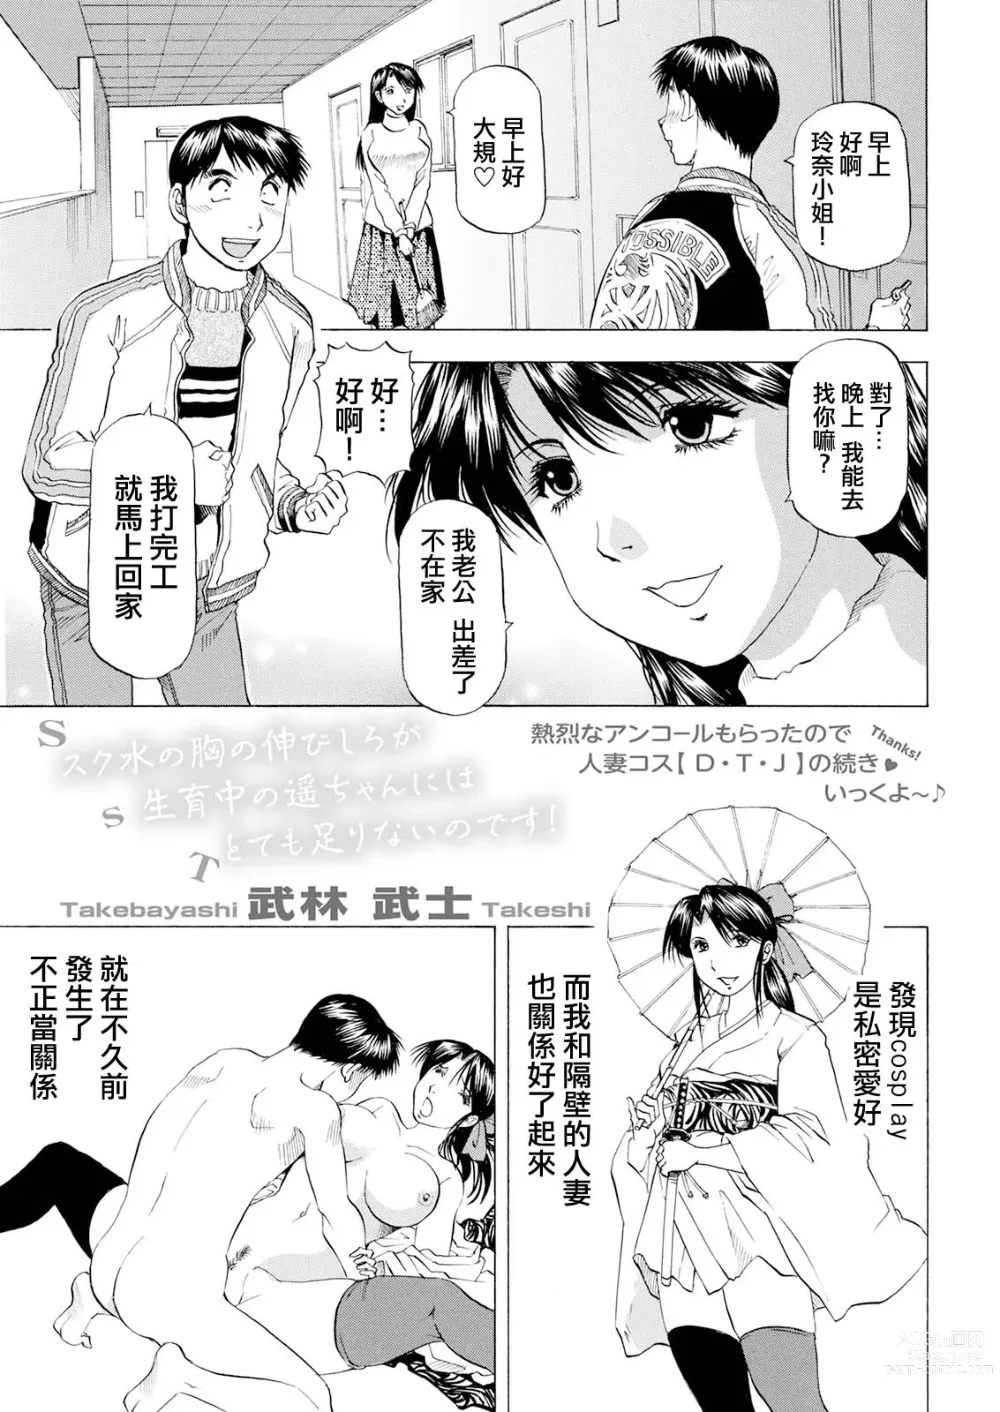 Page 1 of manga S.S.T